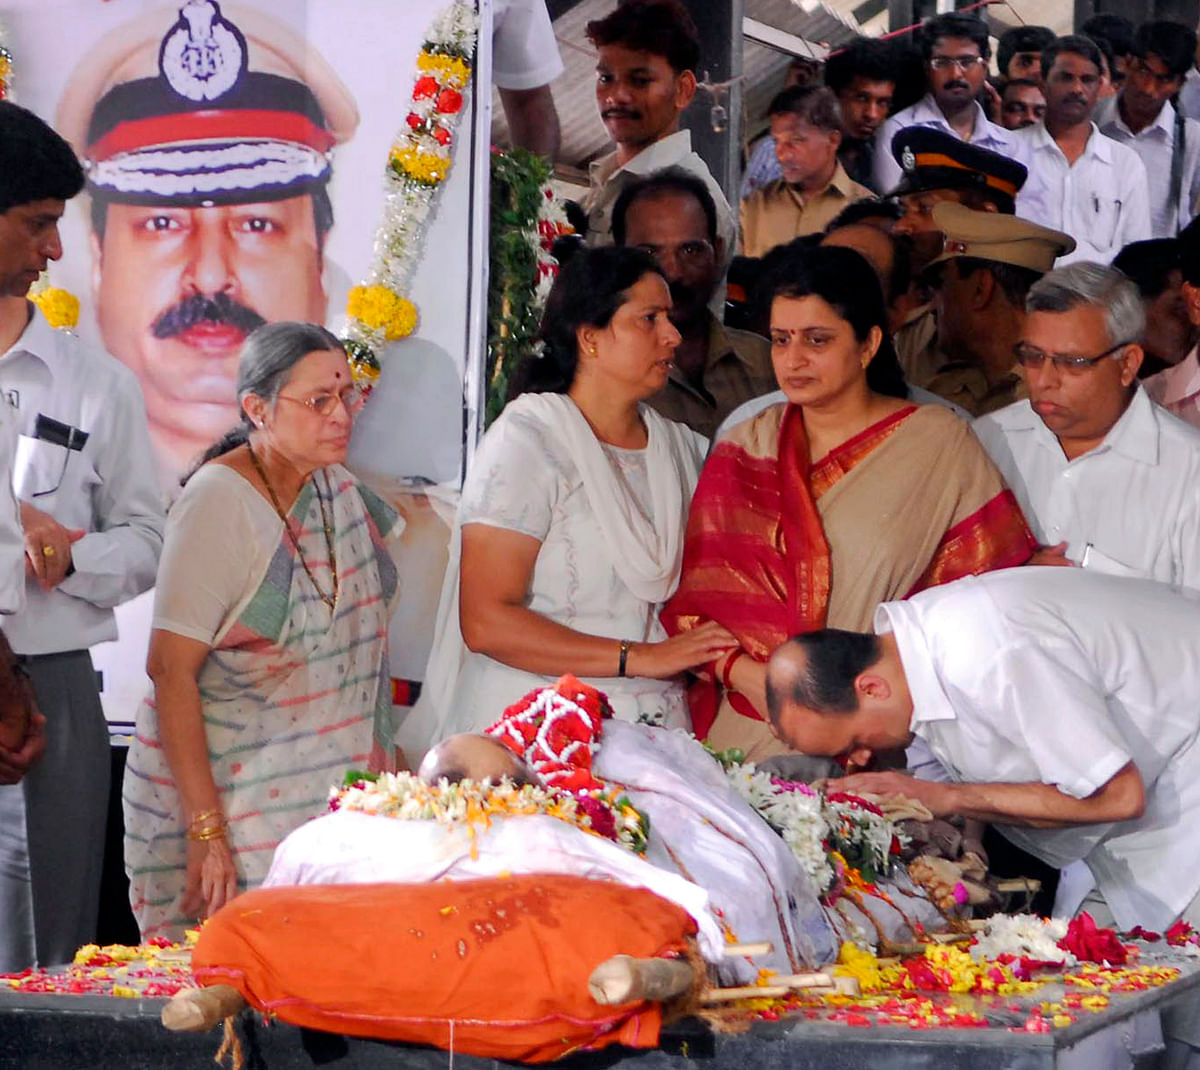 ATS Chief Hemant Karkare, who lost his life in 26/11 Mumbai attacks, was treated extremely shabbily by the govt. 